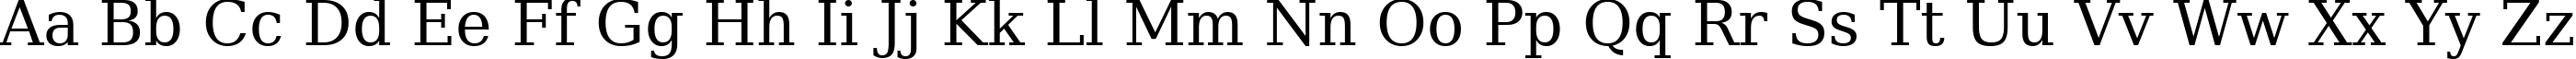 Пример написания английского алфавита шрифтом ae_Sharjah